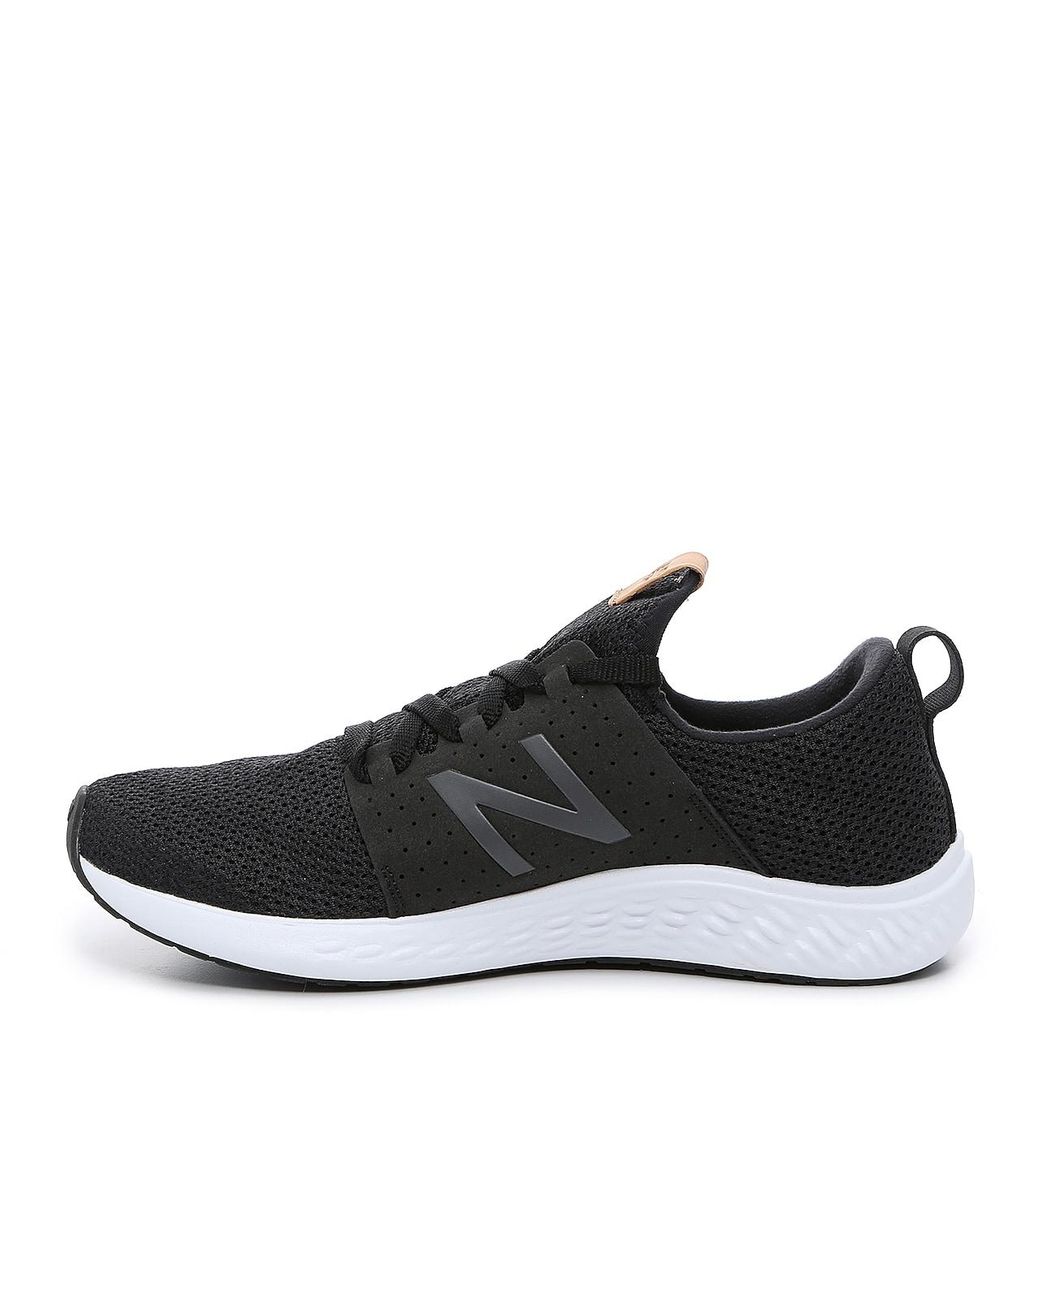 New Balance Fresh Foam Sport Lightweight Running Shoe in Black | Lyst